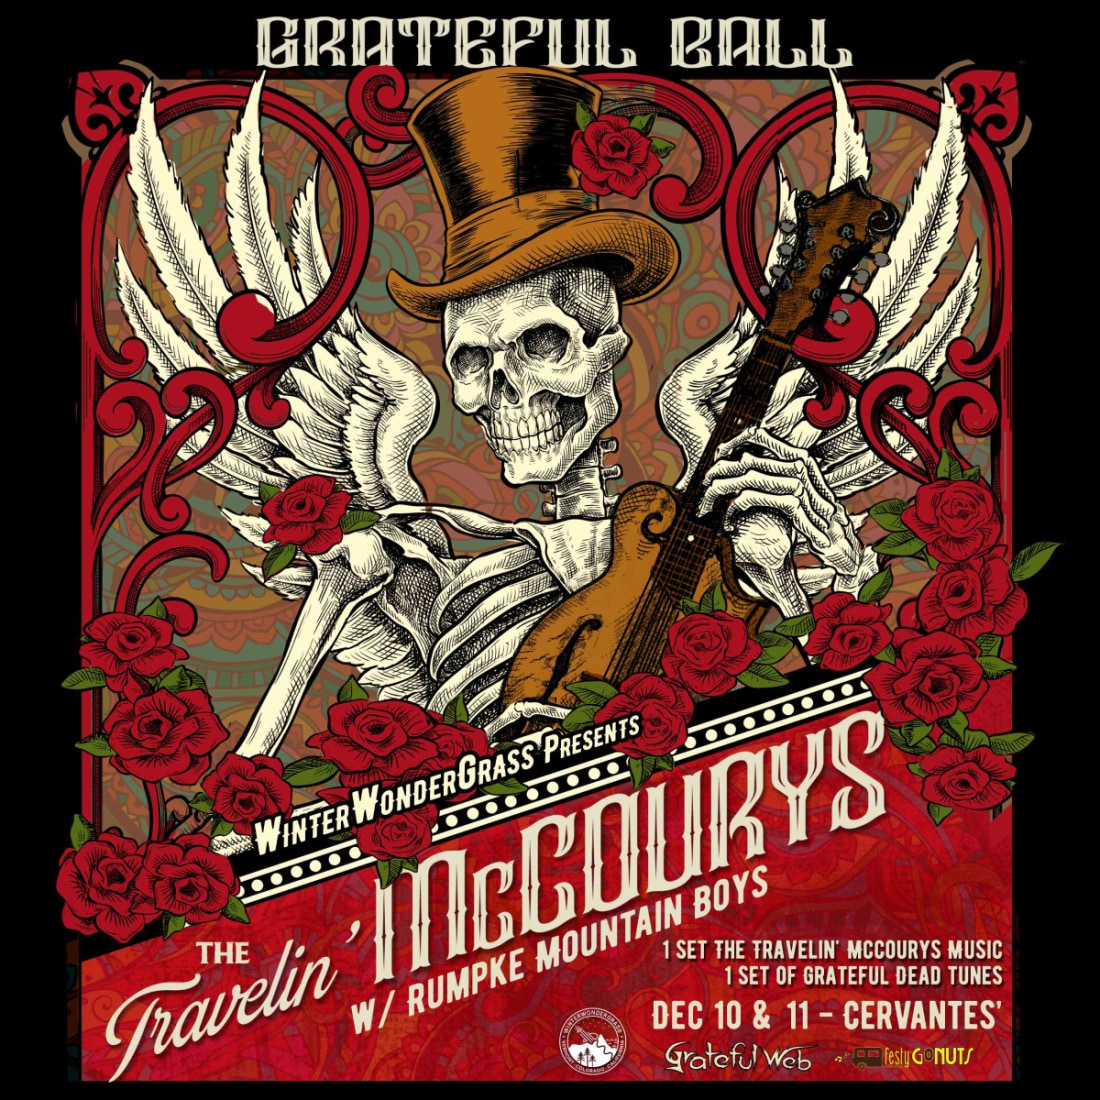 The Grateful Ball ft. The Travelin' McCourys w/ Rumpke Mountain Boys - Presented by WinterWonderGrass *FRI, 12/10*